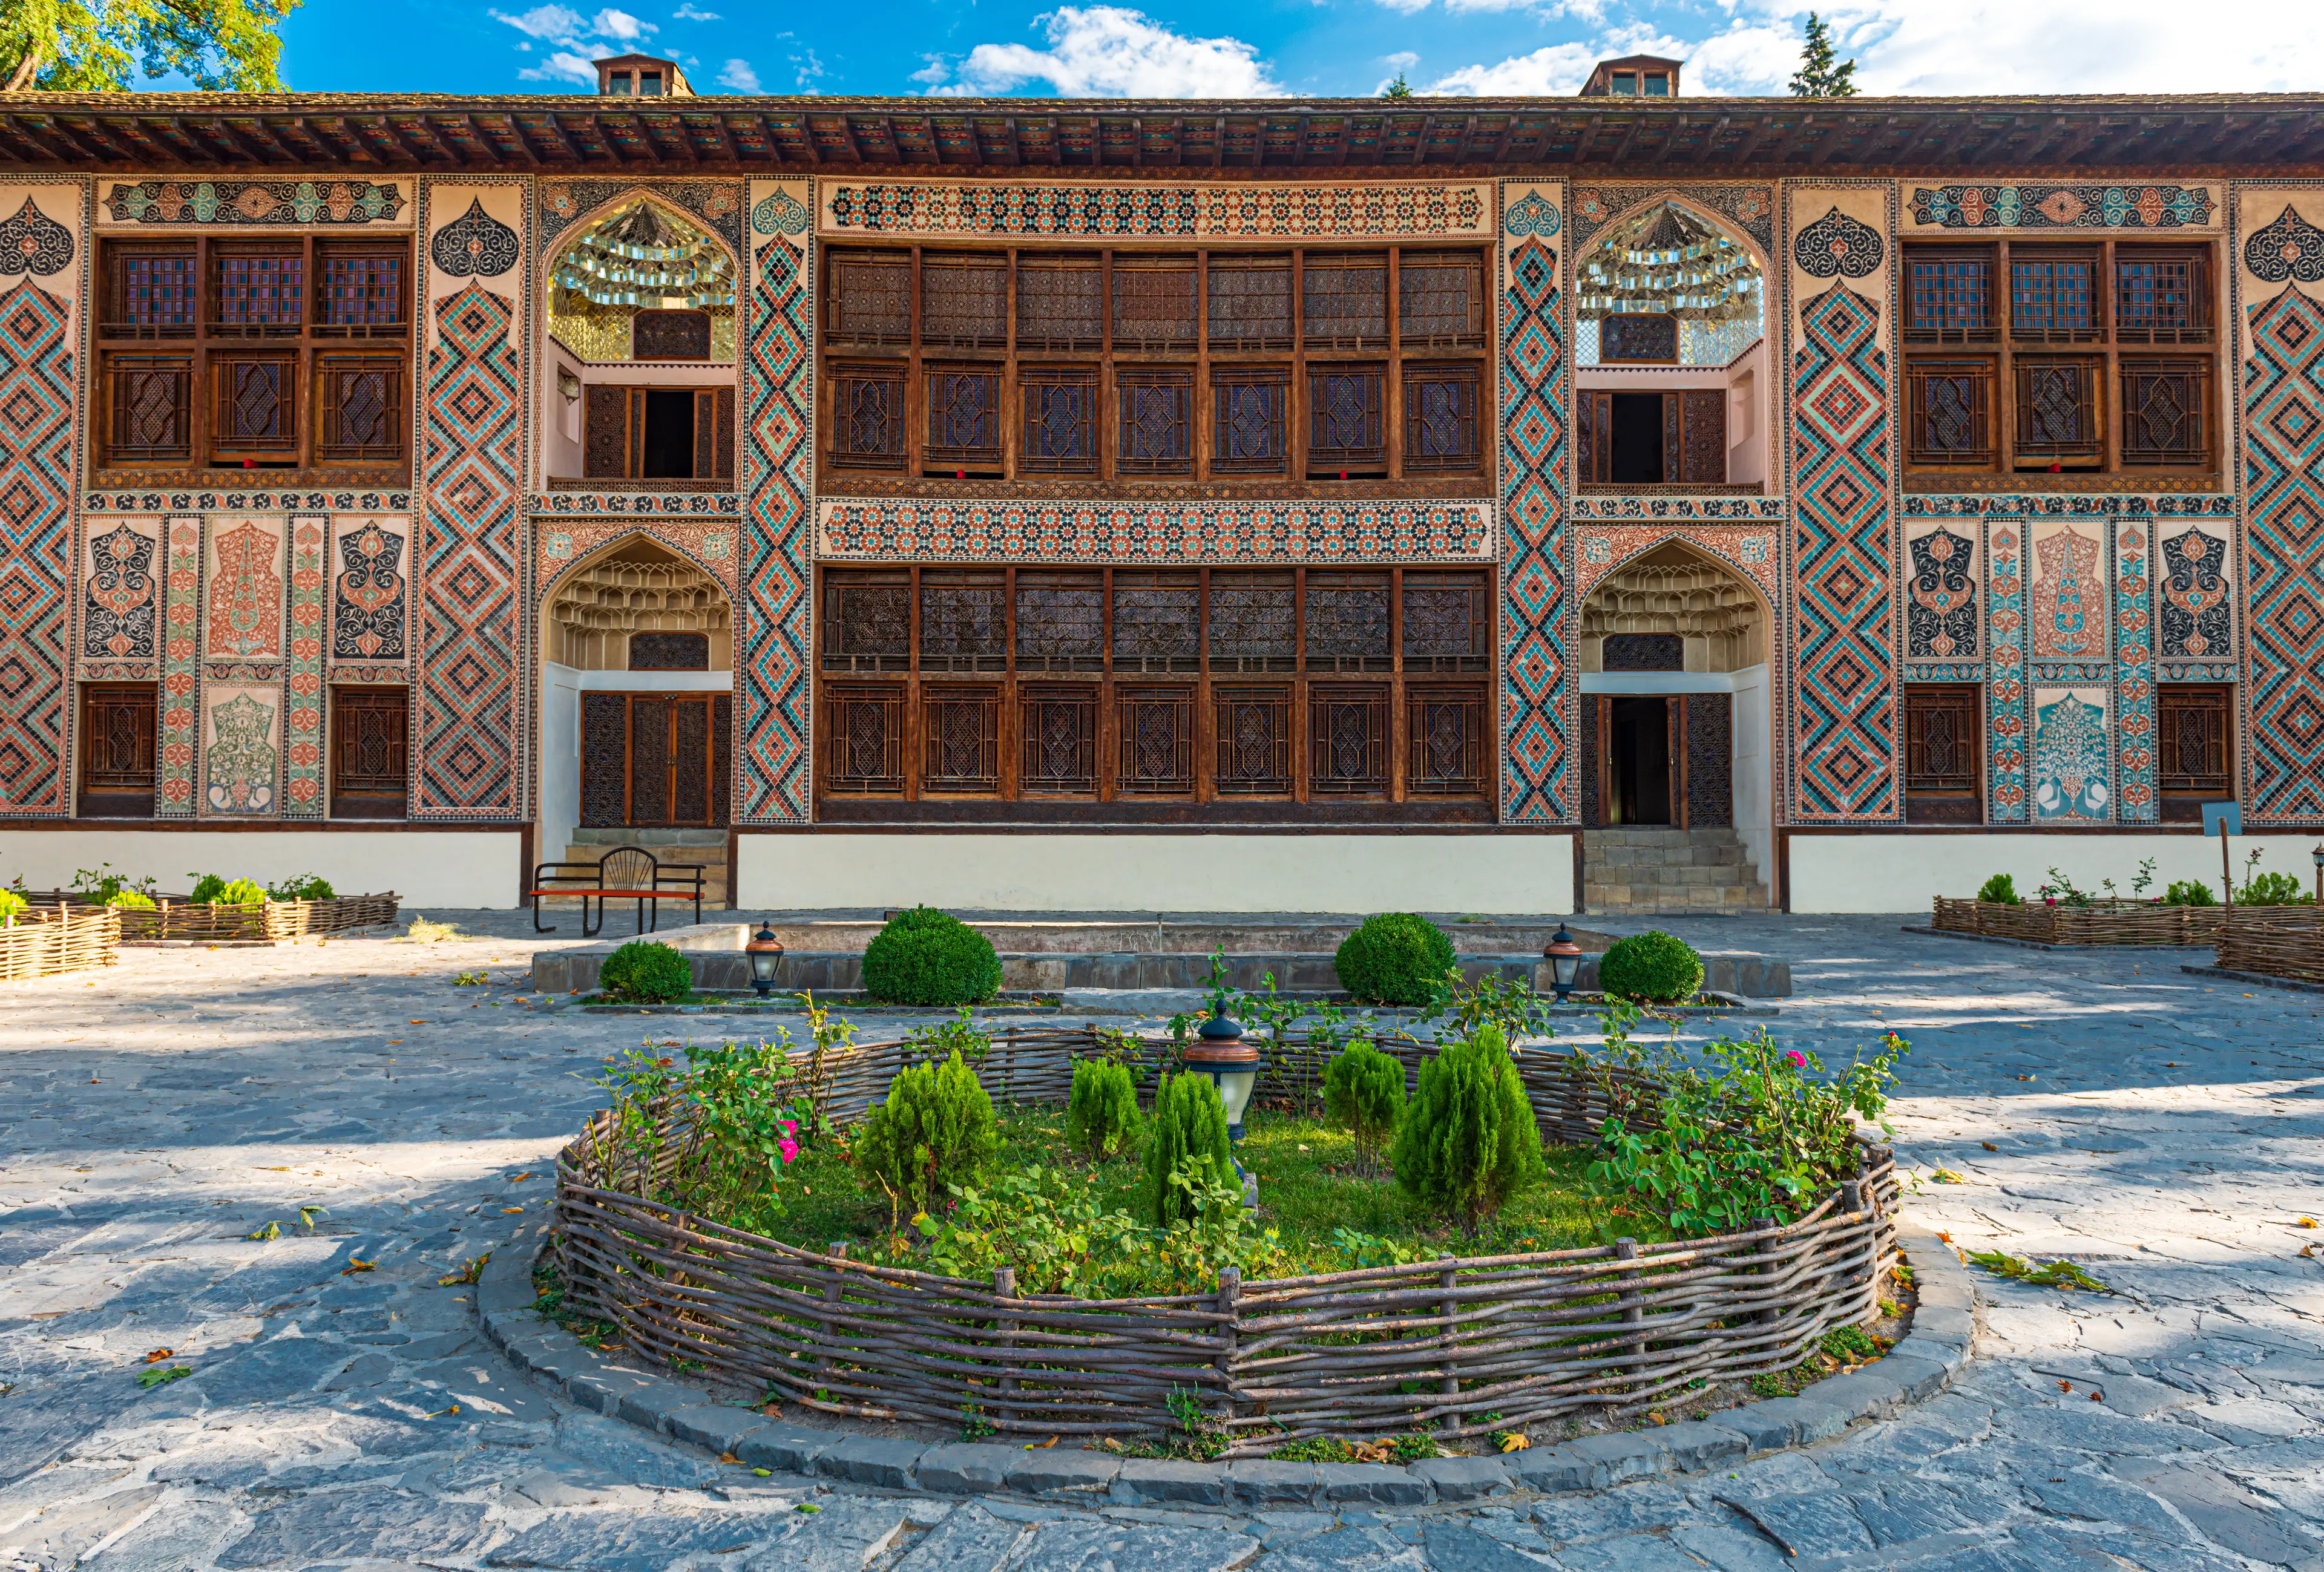 2-Day Exciting Journey: Discover Sheki, Azerbaijan